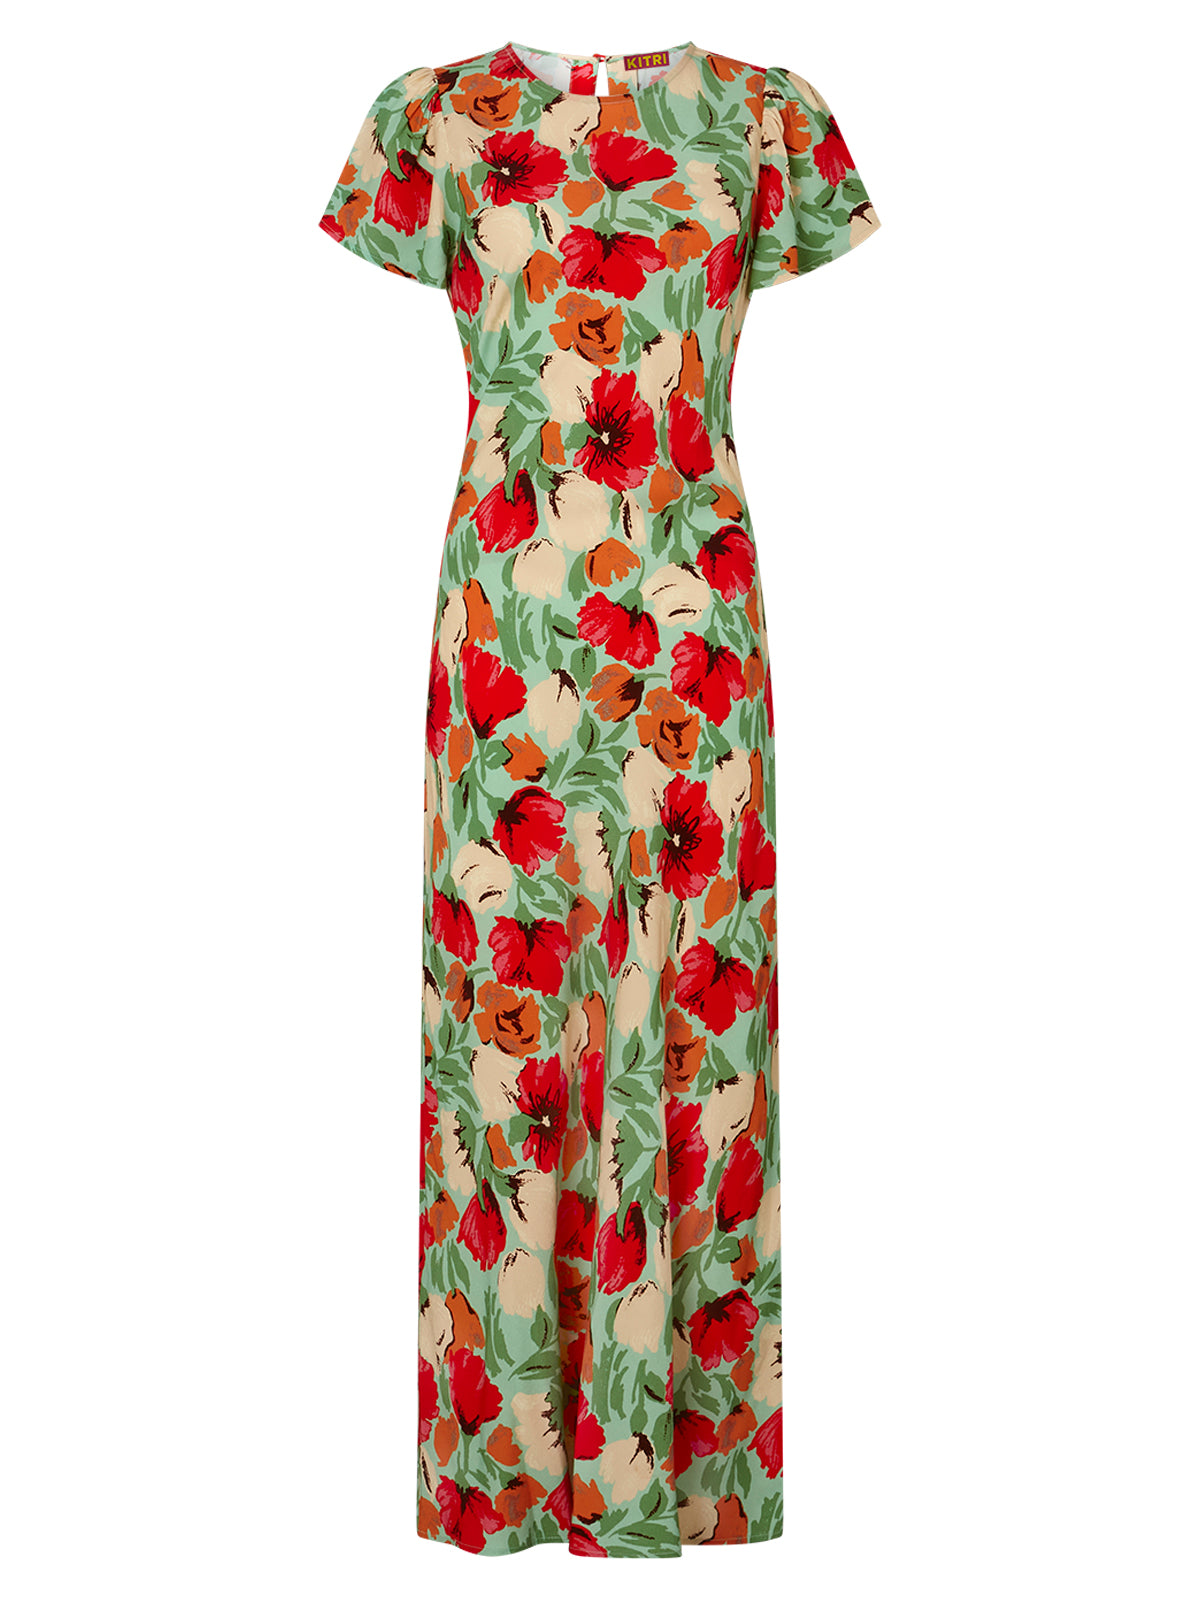 Marie Green Garden Floral Maxi Dress By KITRI Studio